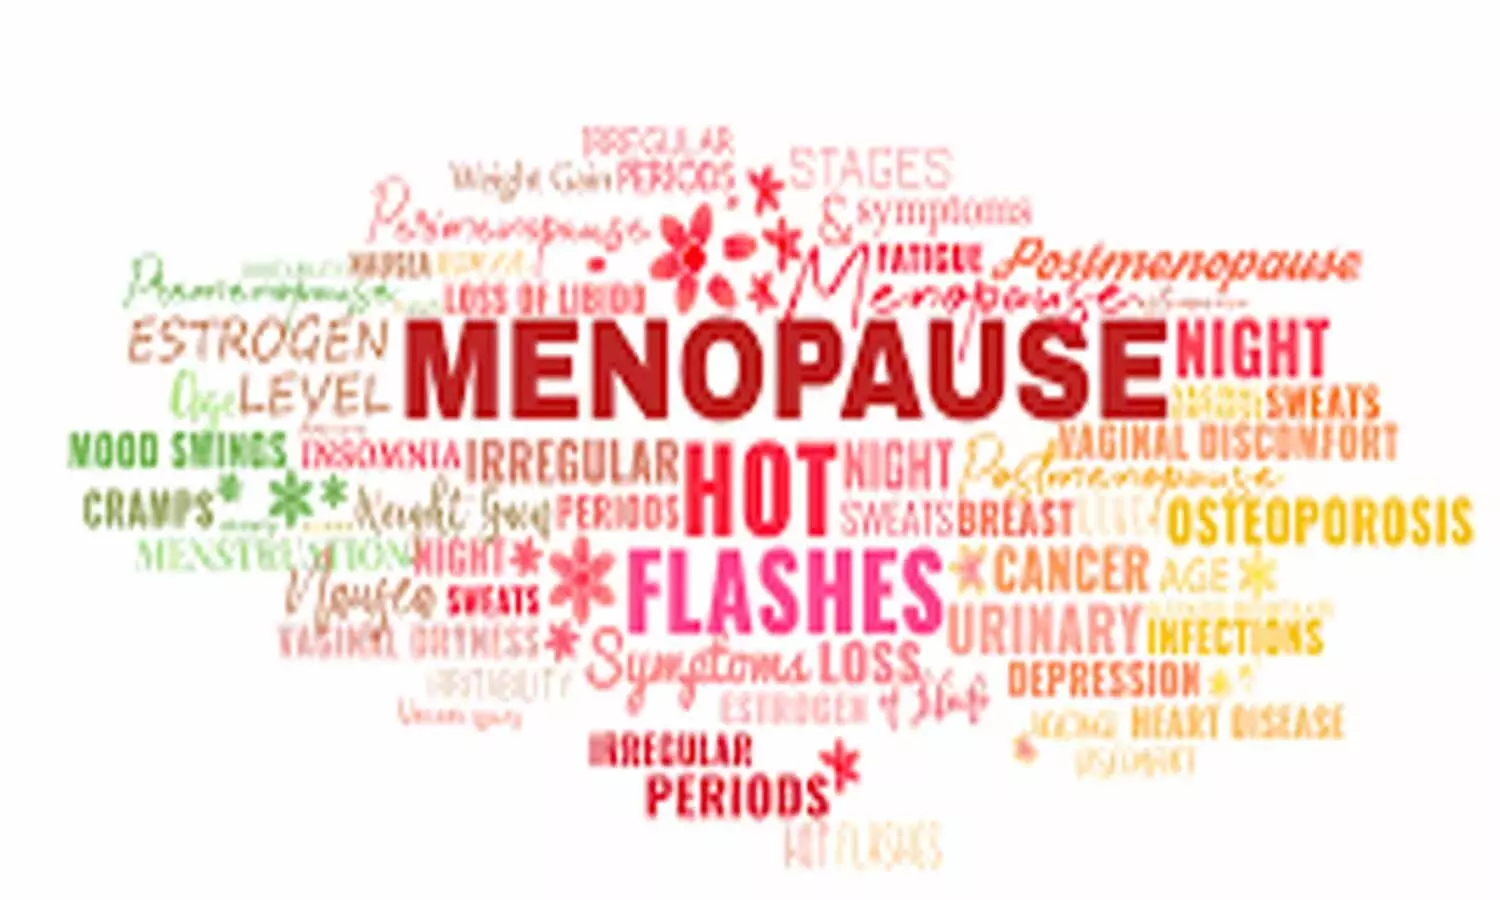 About 25% of peri- and postmenopausal women experience palpitation distress: Study